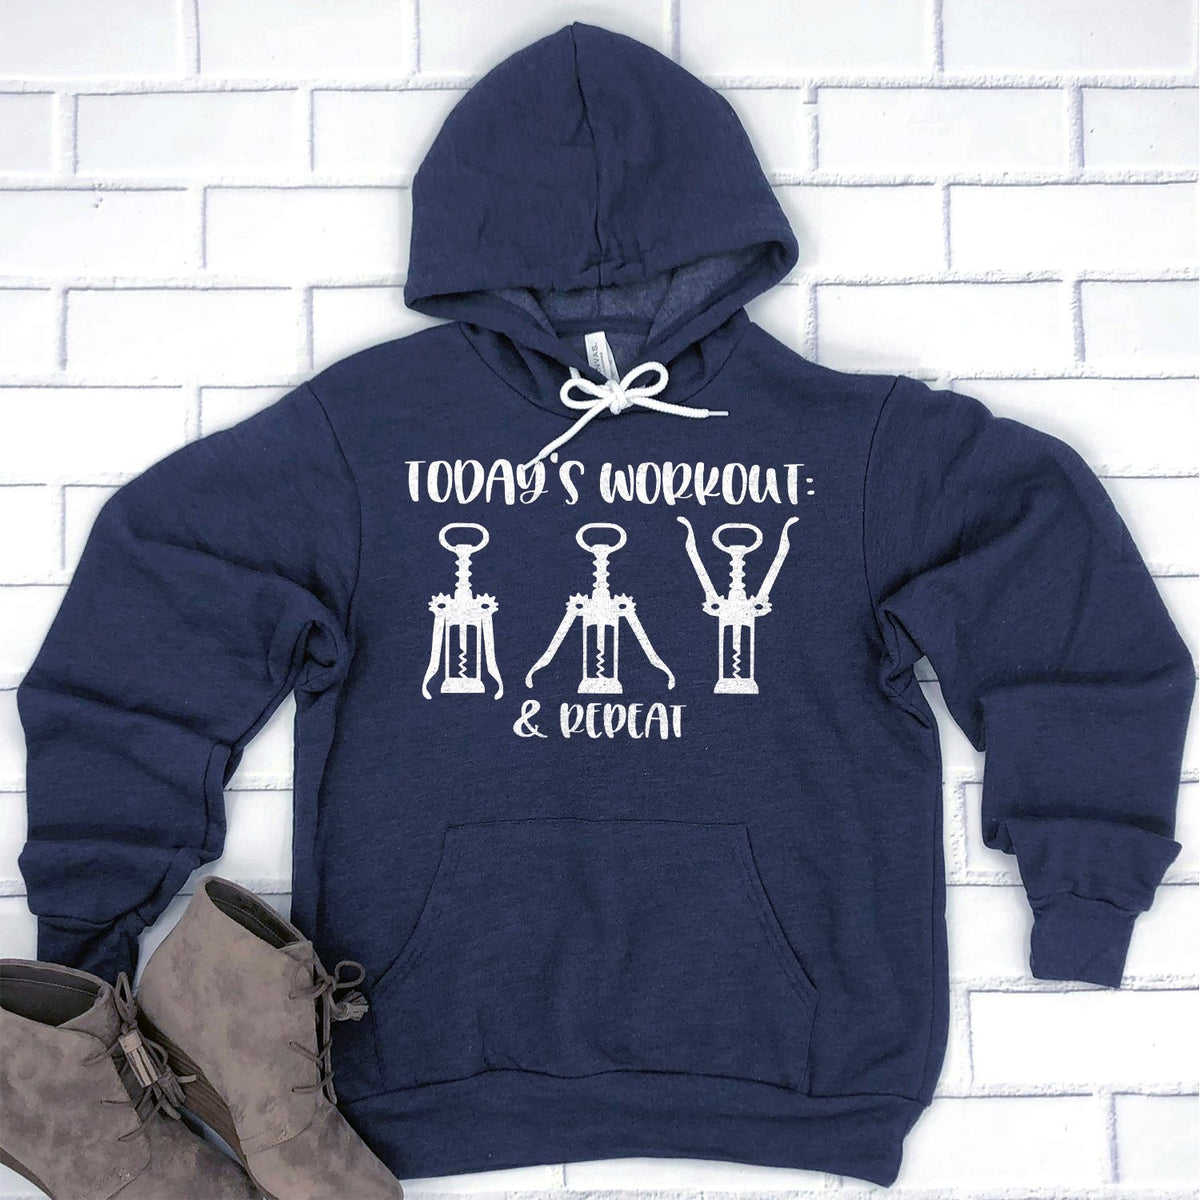 Today&#39;s Workout: Wine &amp; Repeat - Hoodie Sweatshirt